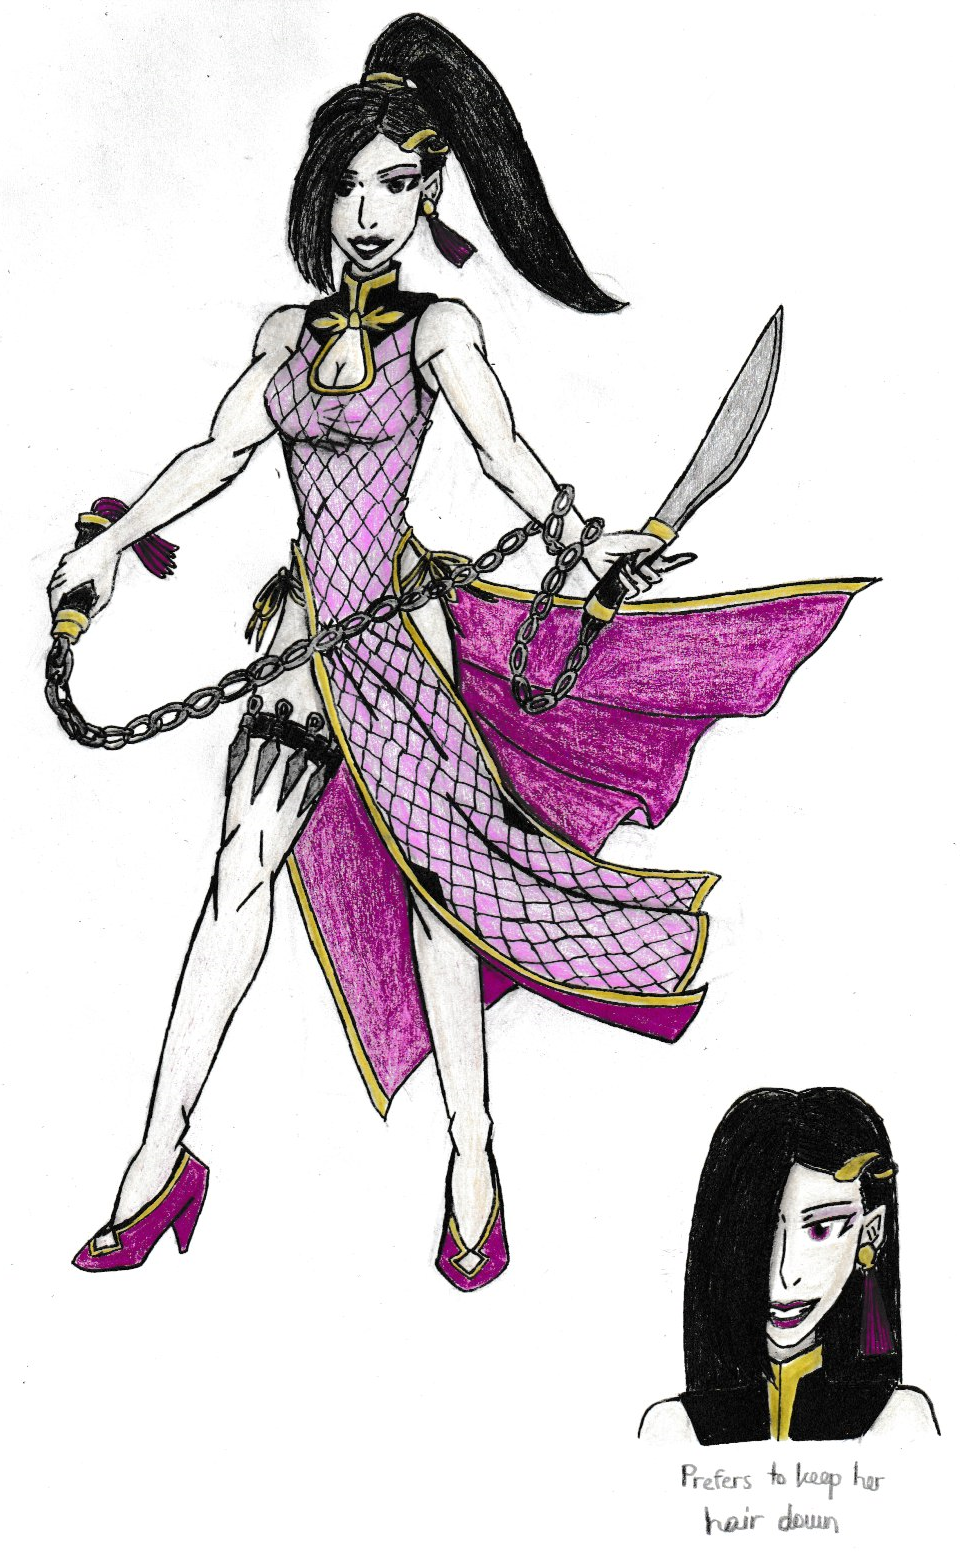 Yu-Gi-Oh! Female Villains by SenbonzakuraXX23 on DeviantArt